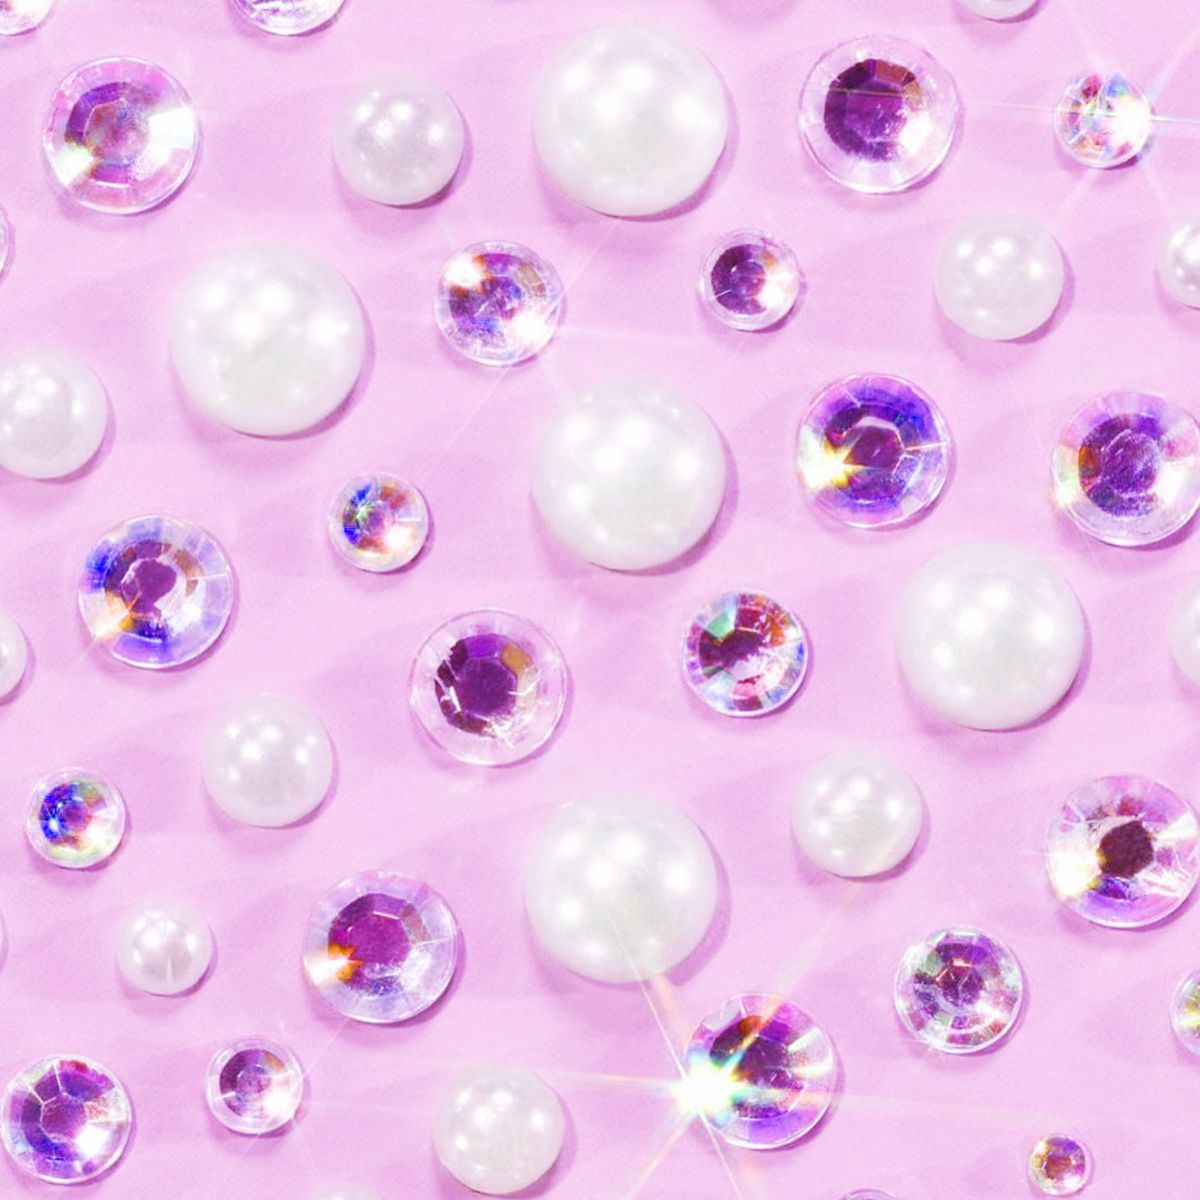 Gem It Up - Burlesque Pearls - Poshmellow Beauty